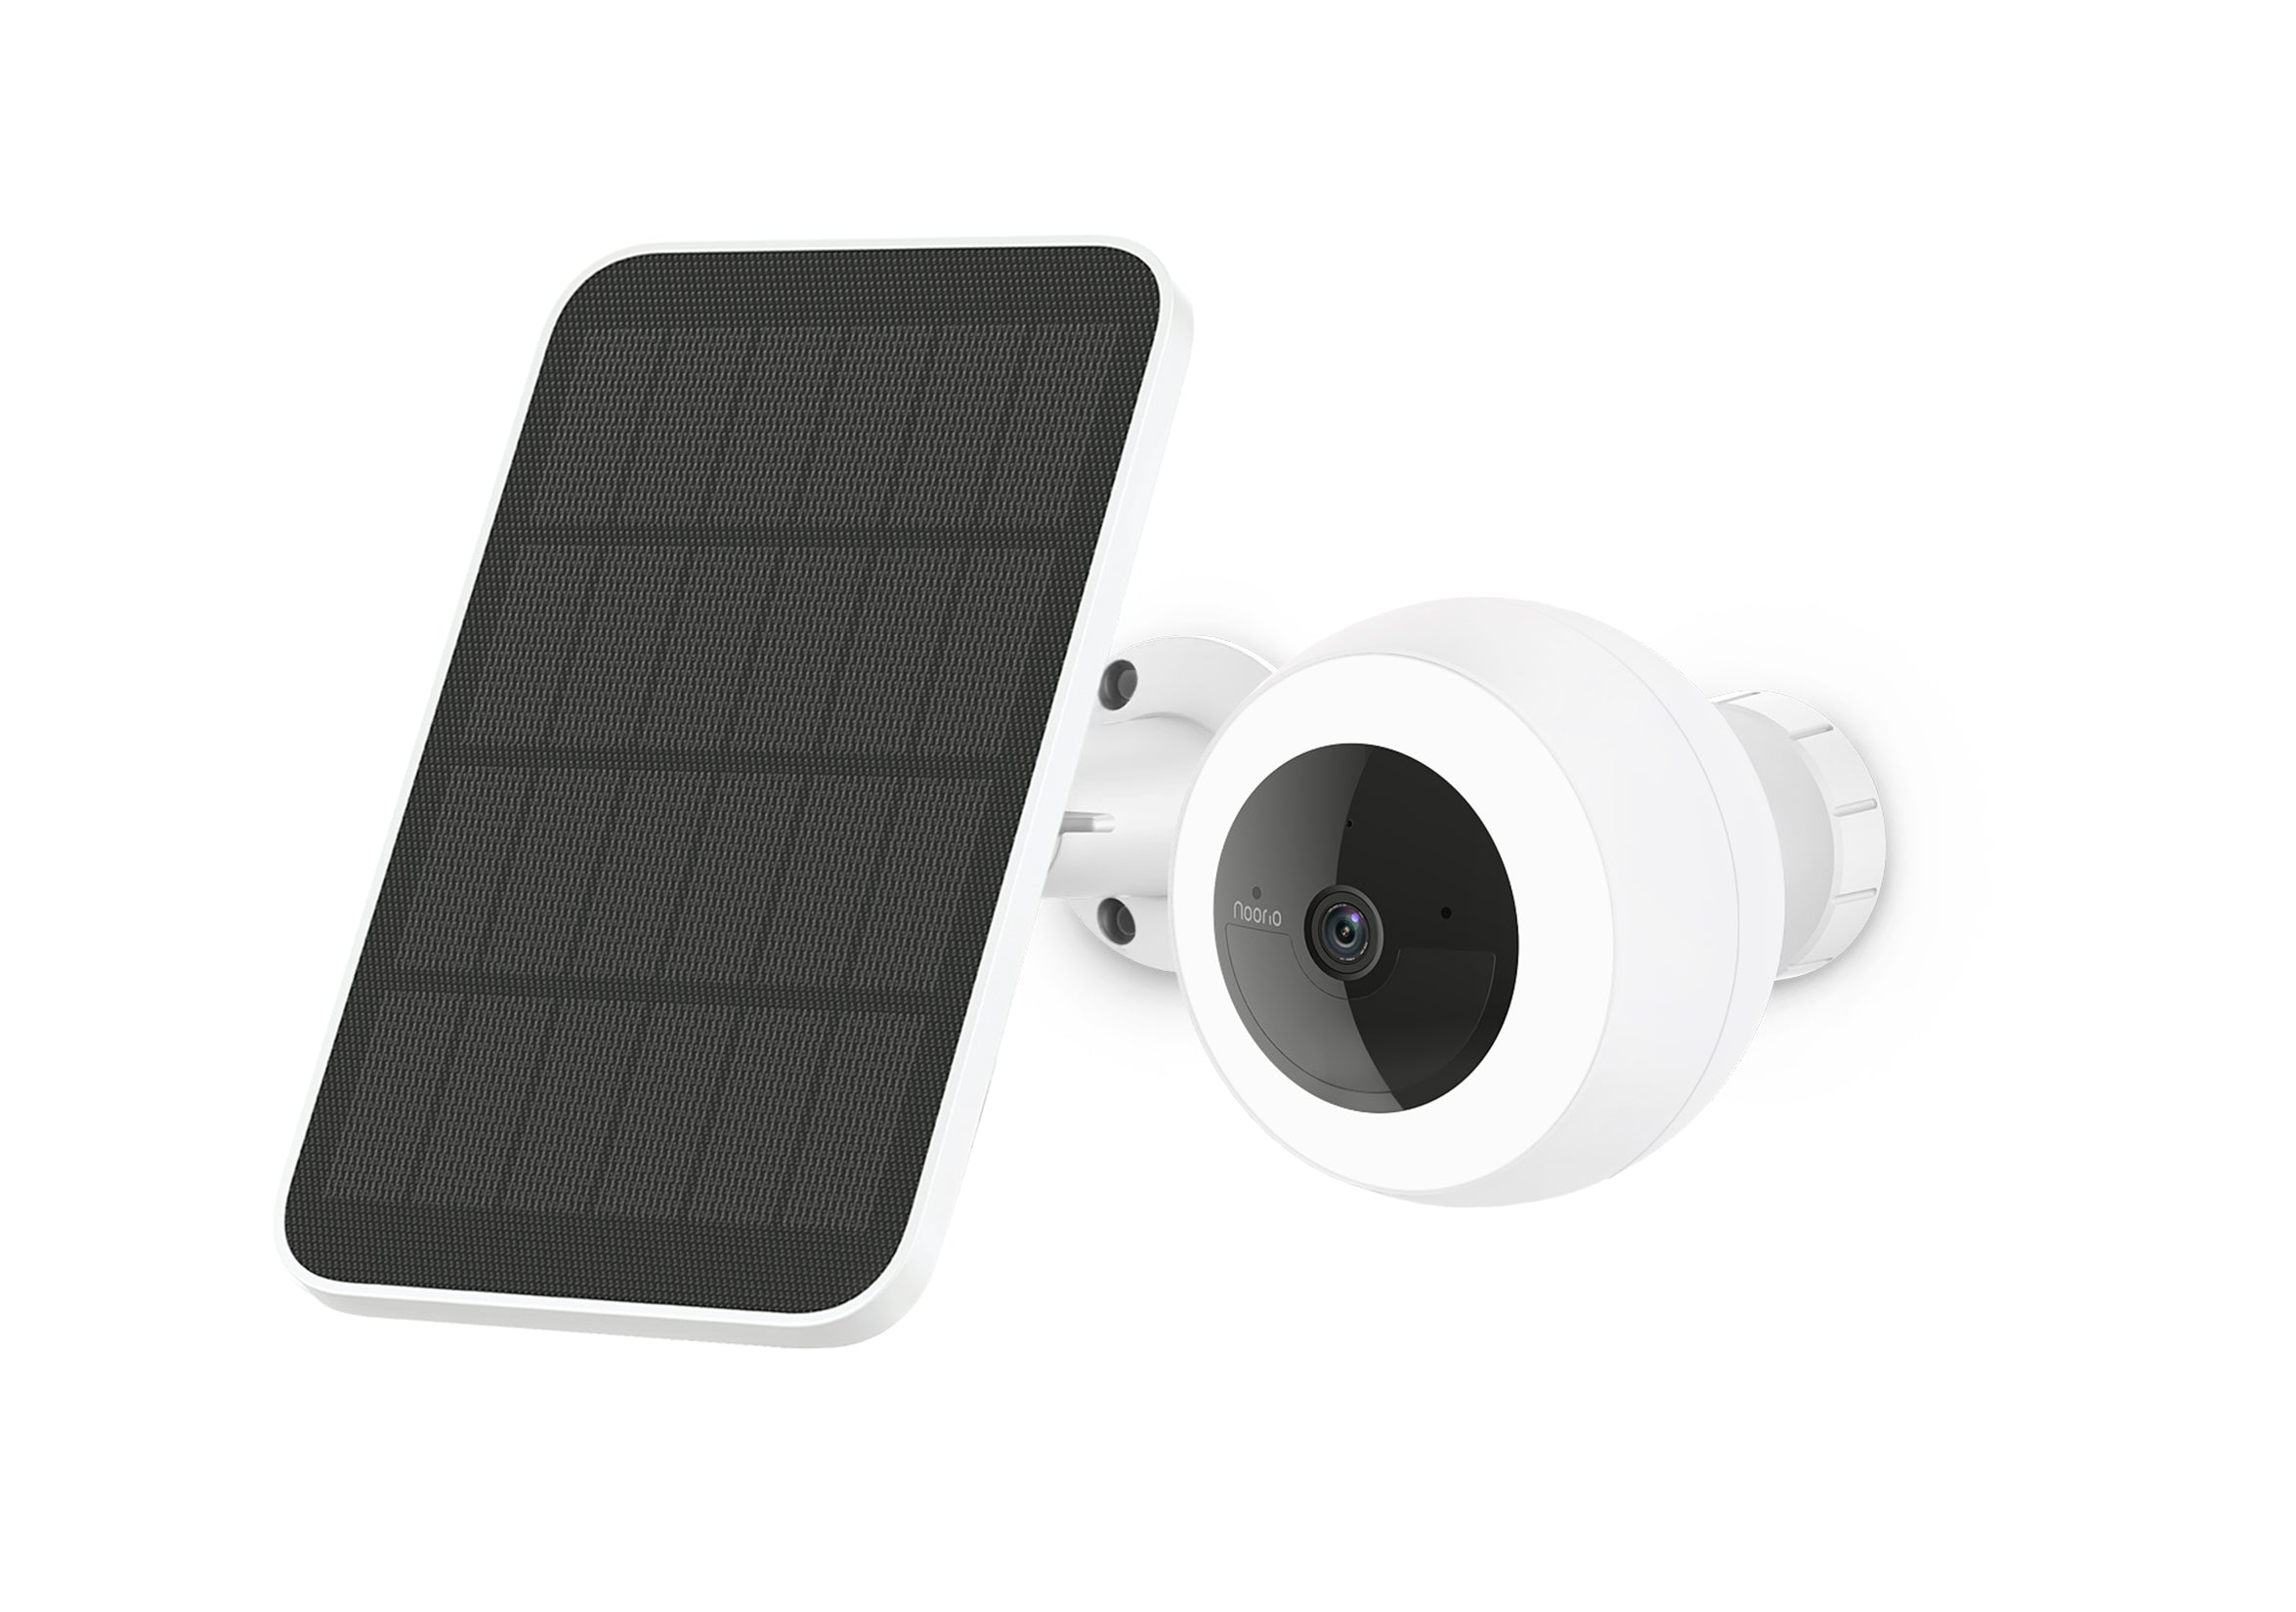 B310 Solar-Powered Floodlight Security System: Easy Setup, 2K HD